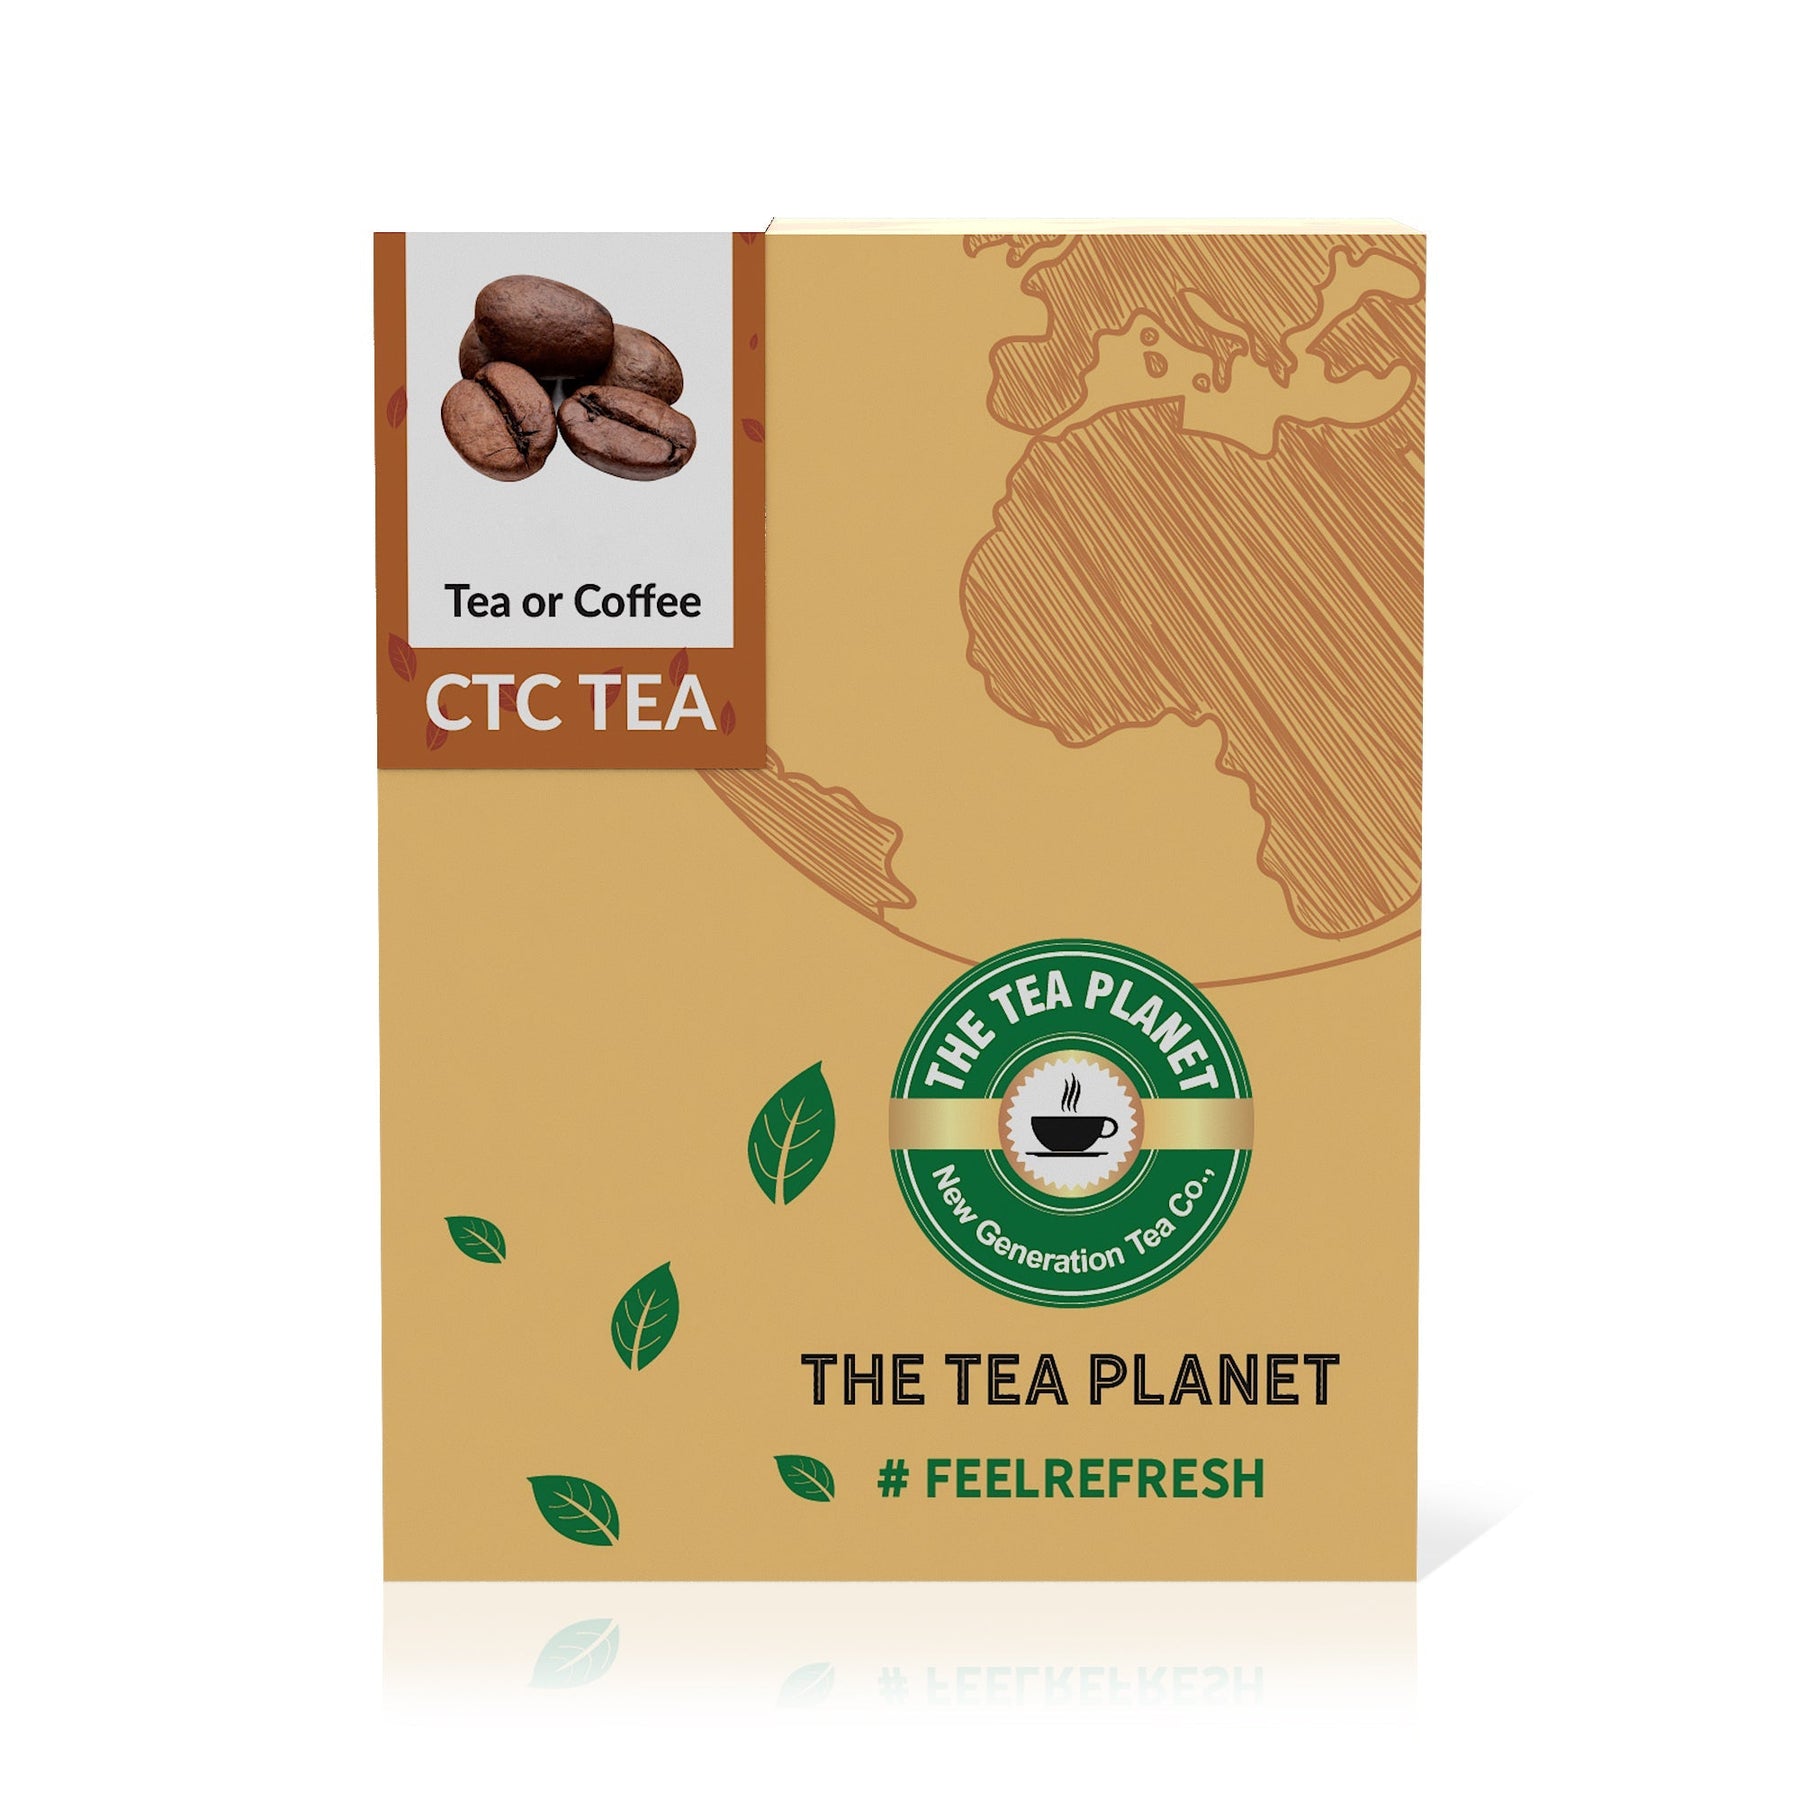 Tea or Coffee Flavored CTC Tea 1